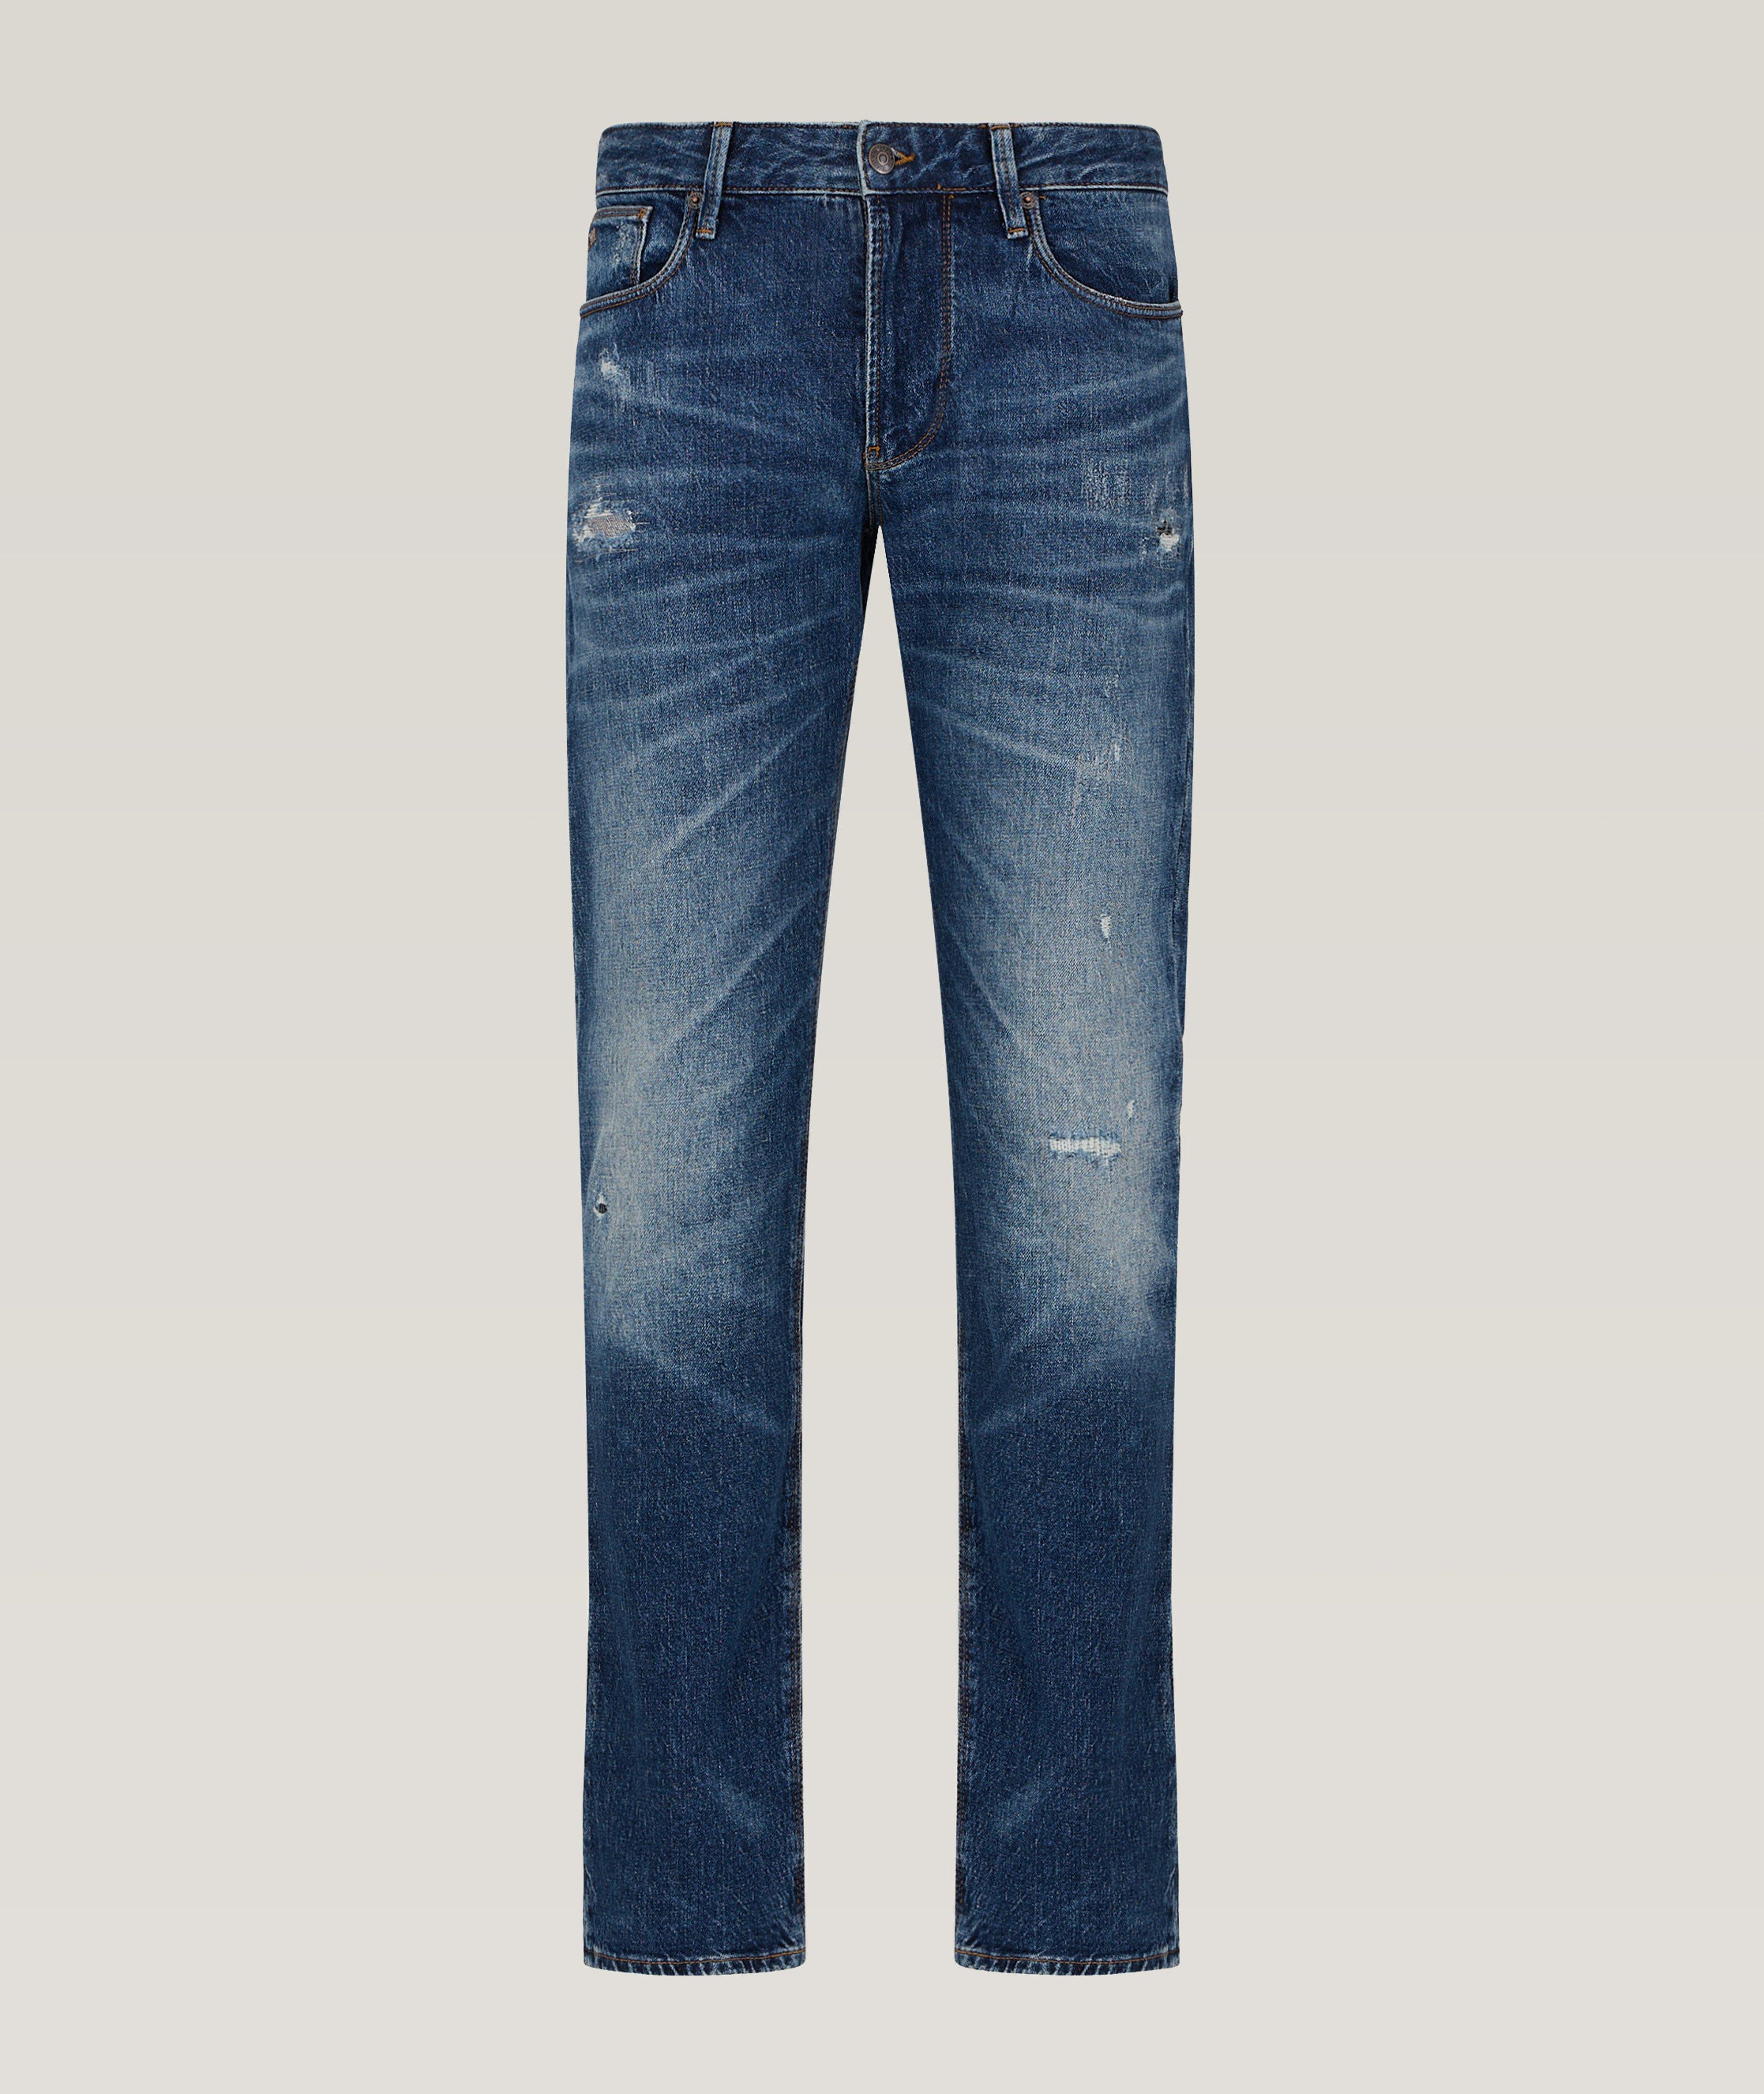 J06 Slim Fit Stretch-Cotton Jeans image 0